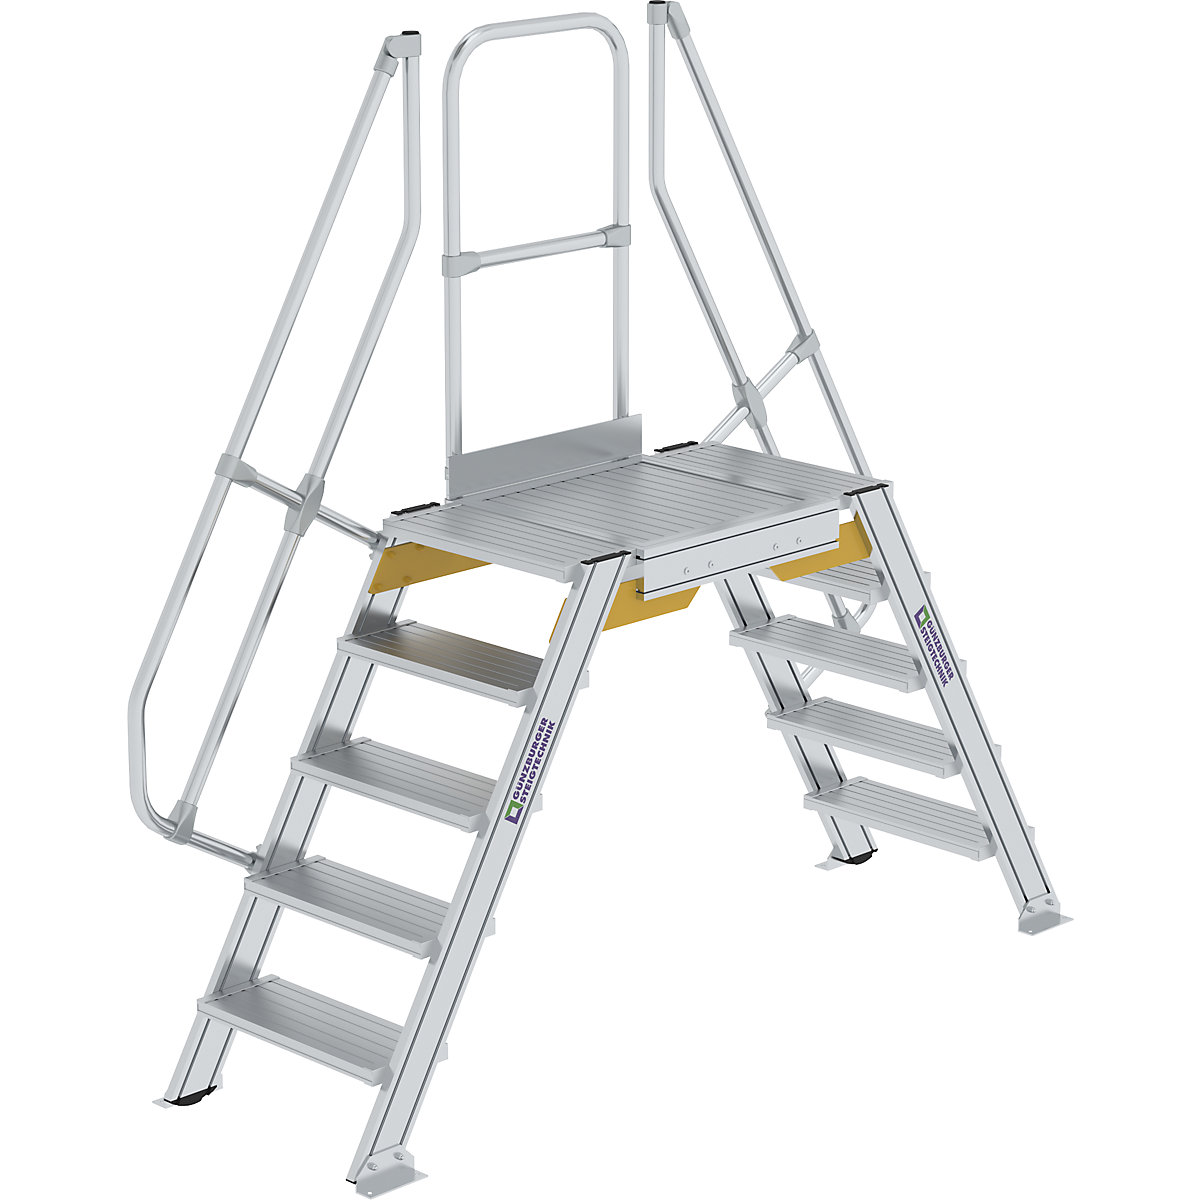 Premostitvena lestev – MUNK, skupna nosilnost 300 kg, 5 stopnic, podest 1200 x 600 mm